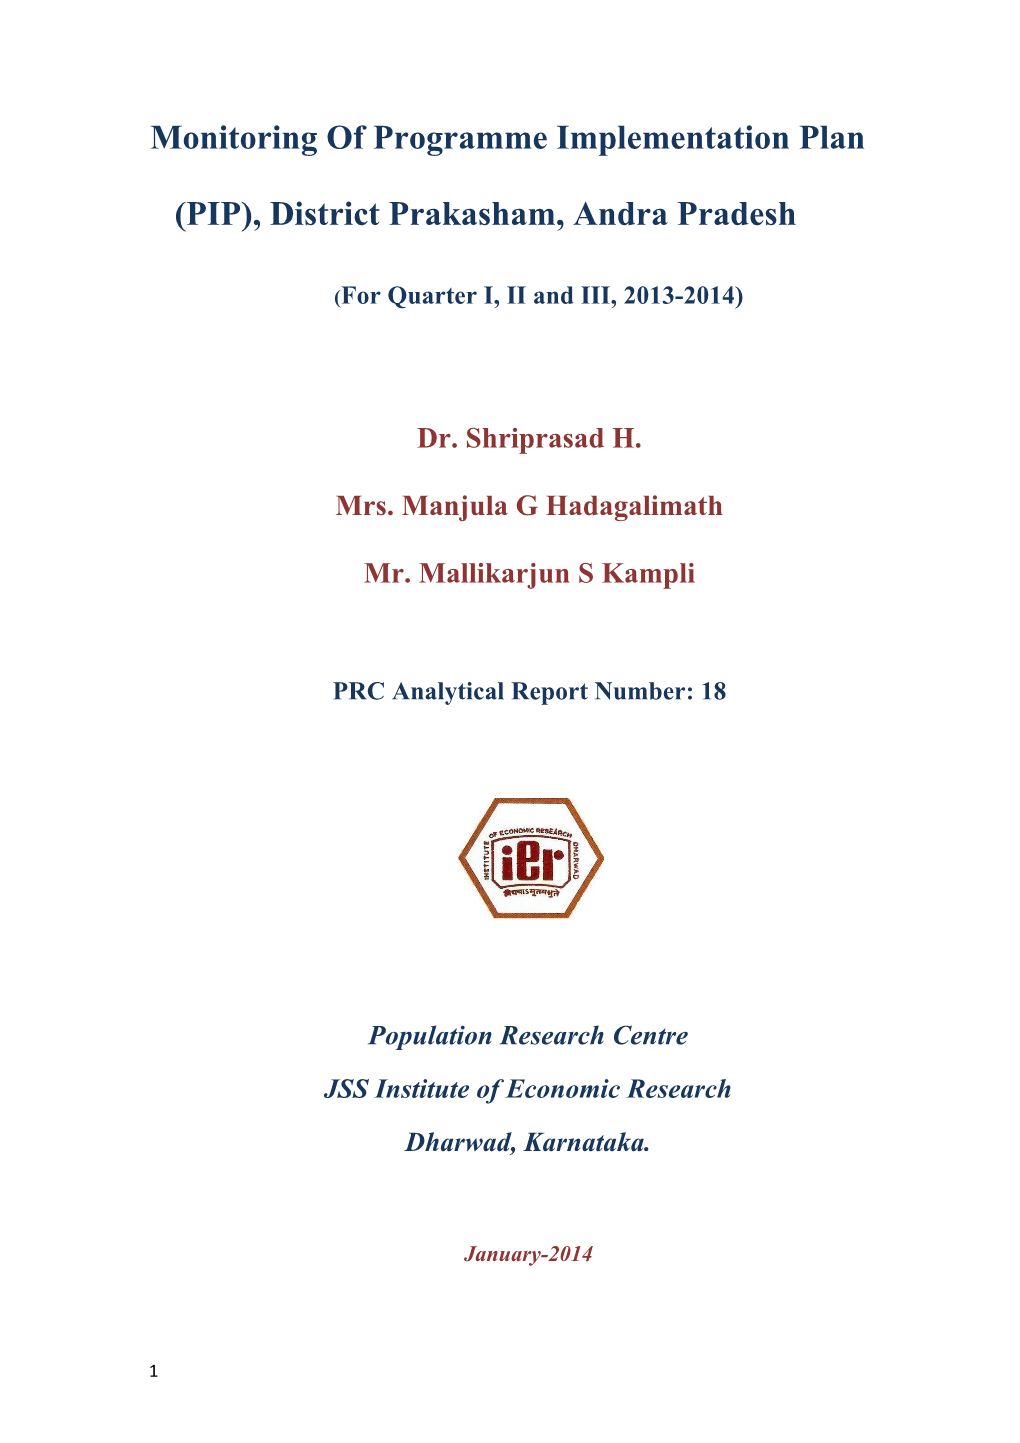 Prakasam - PIP Report